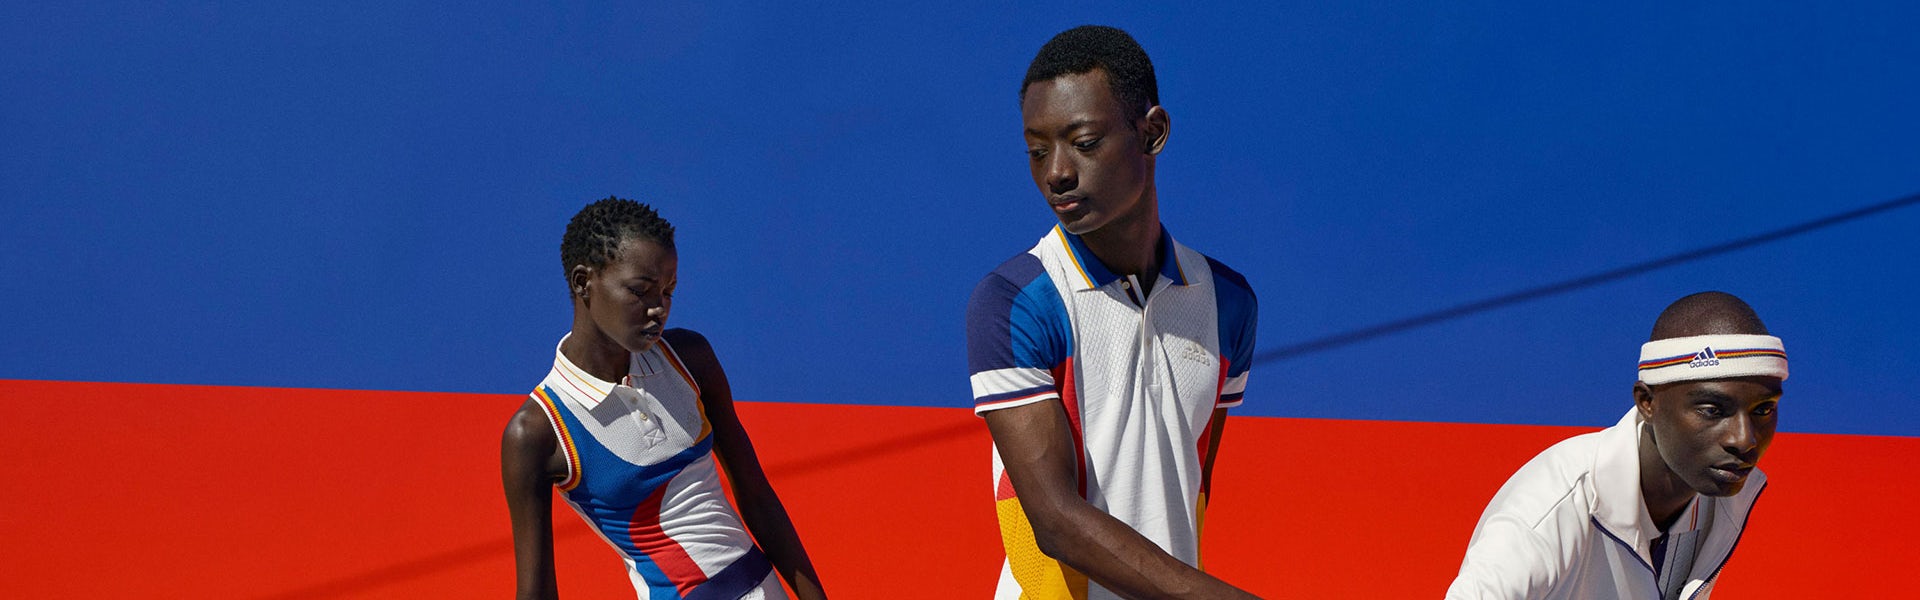 gritar Chaleco reserva Viviane Sassen: Adidas Tennis by Pharrell Williams